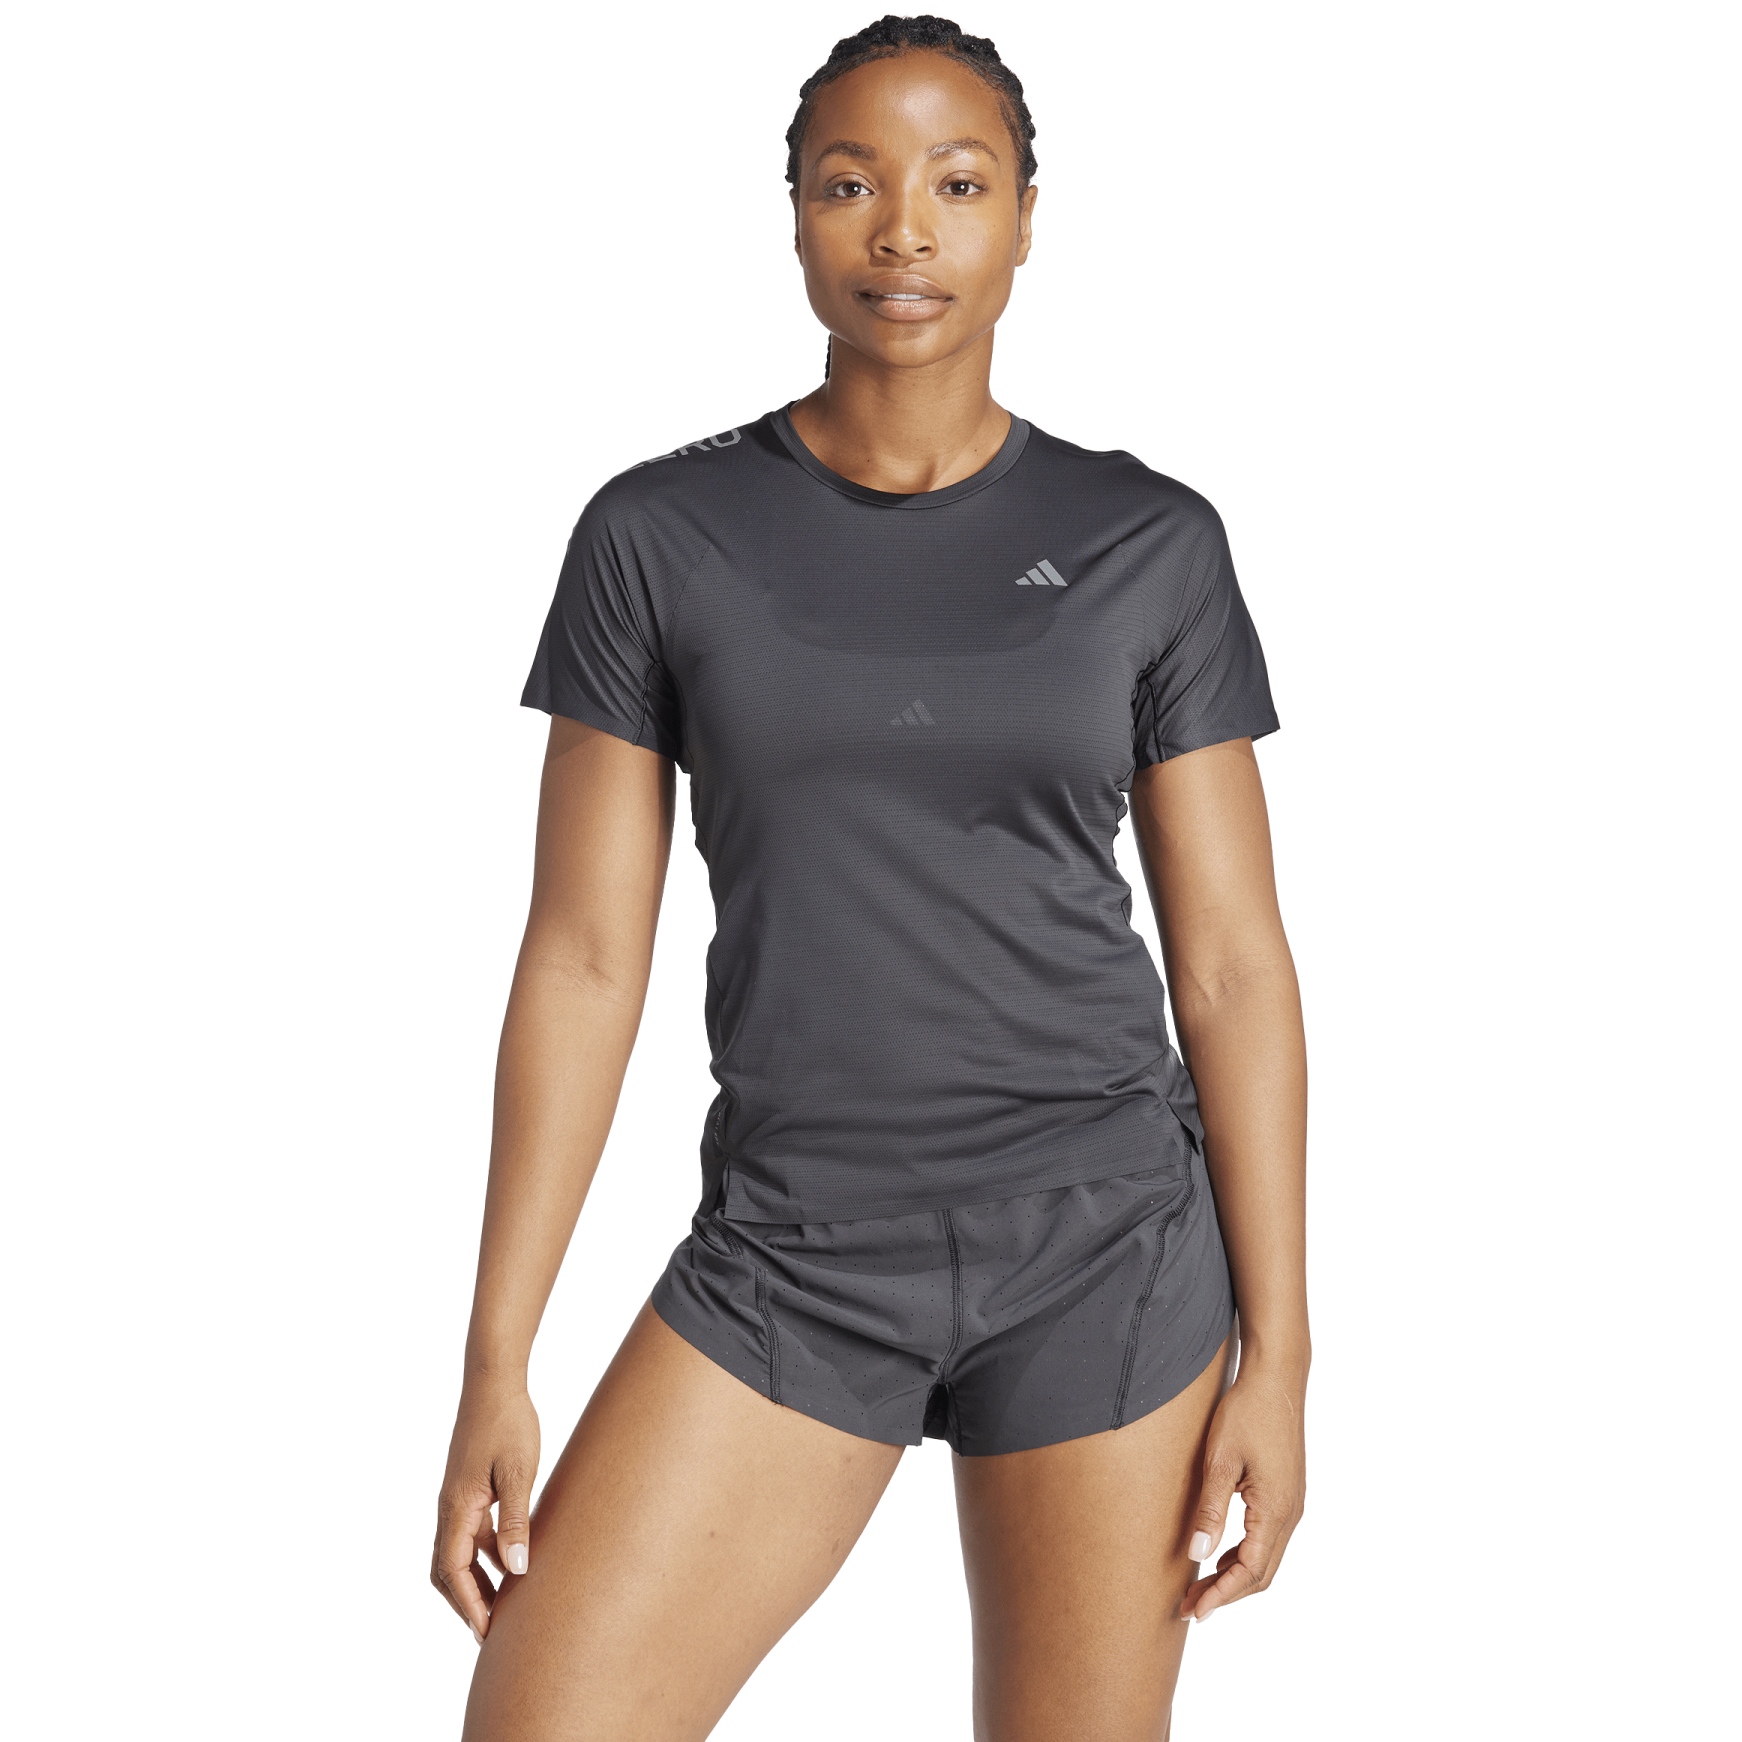 Produktbild von adidas Adizero Running T-Shirt Damen - black/grey six IK9710